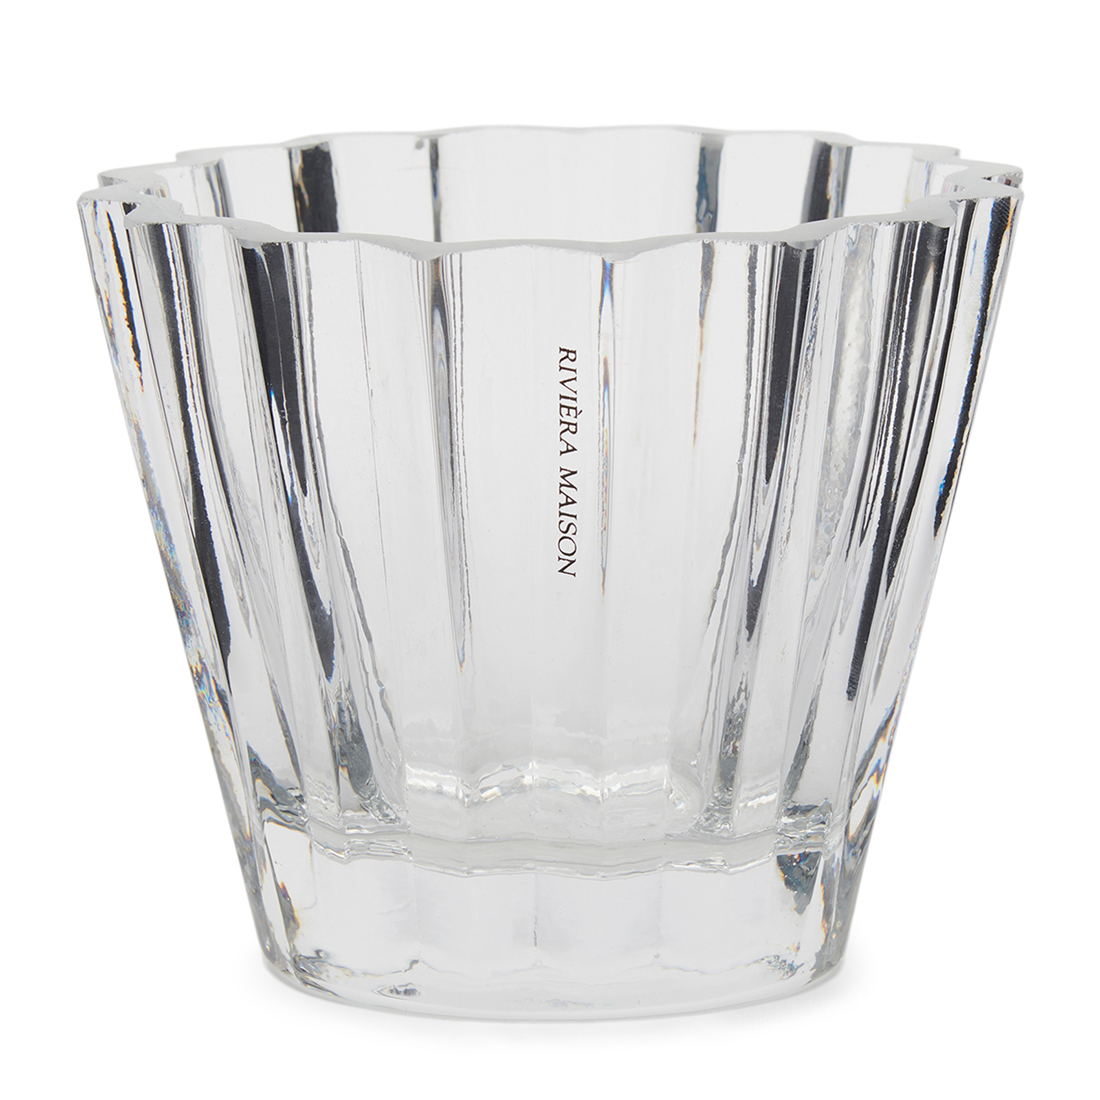 Riviera Maison Theelichthouders glas - RM Folded Votive - Transparant